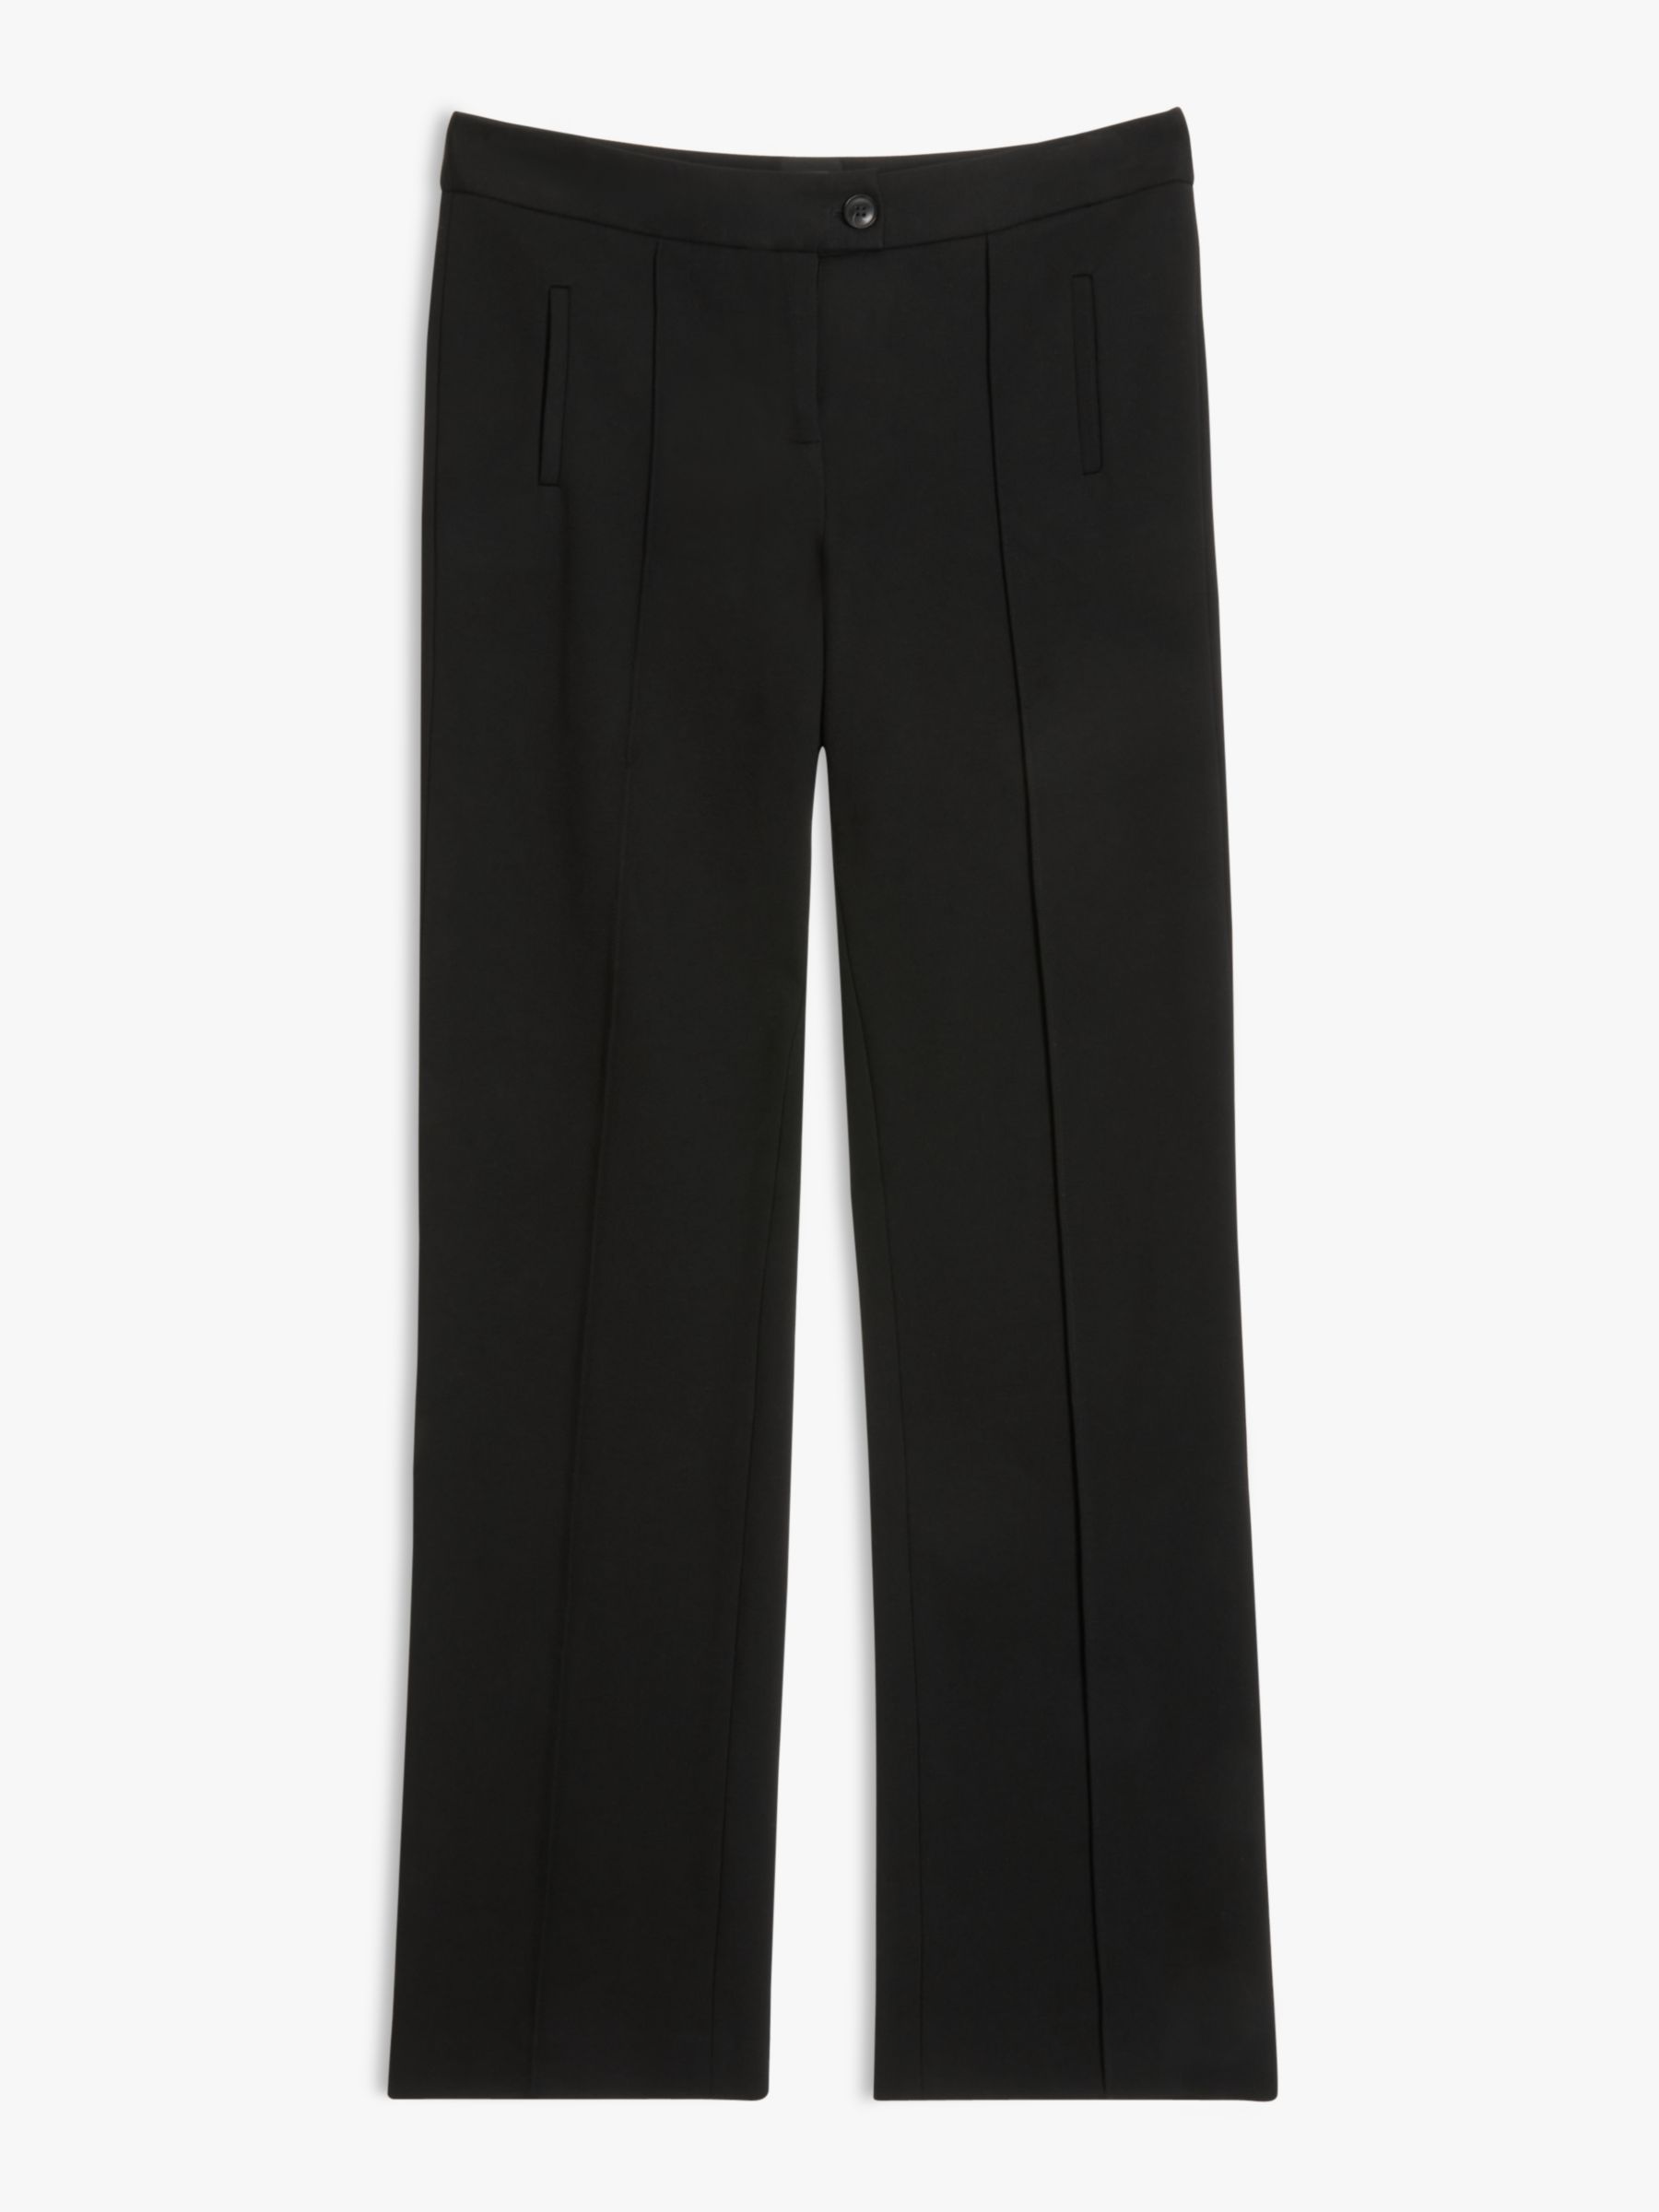 John Lewis & Partners Ponte Tailored Trousers, Black